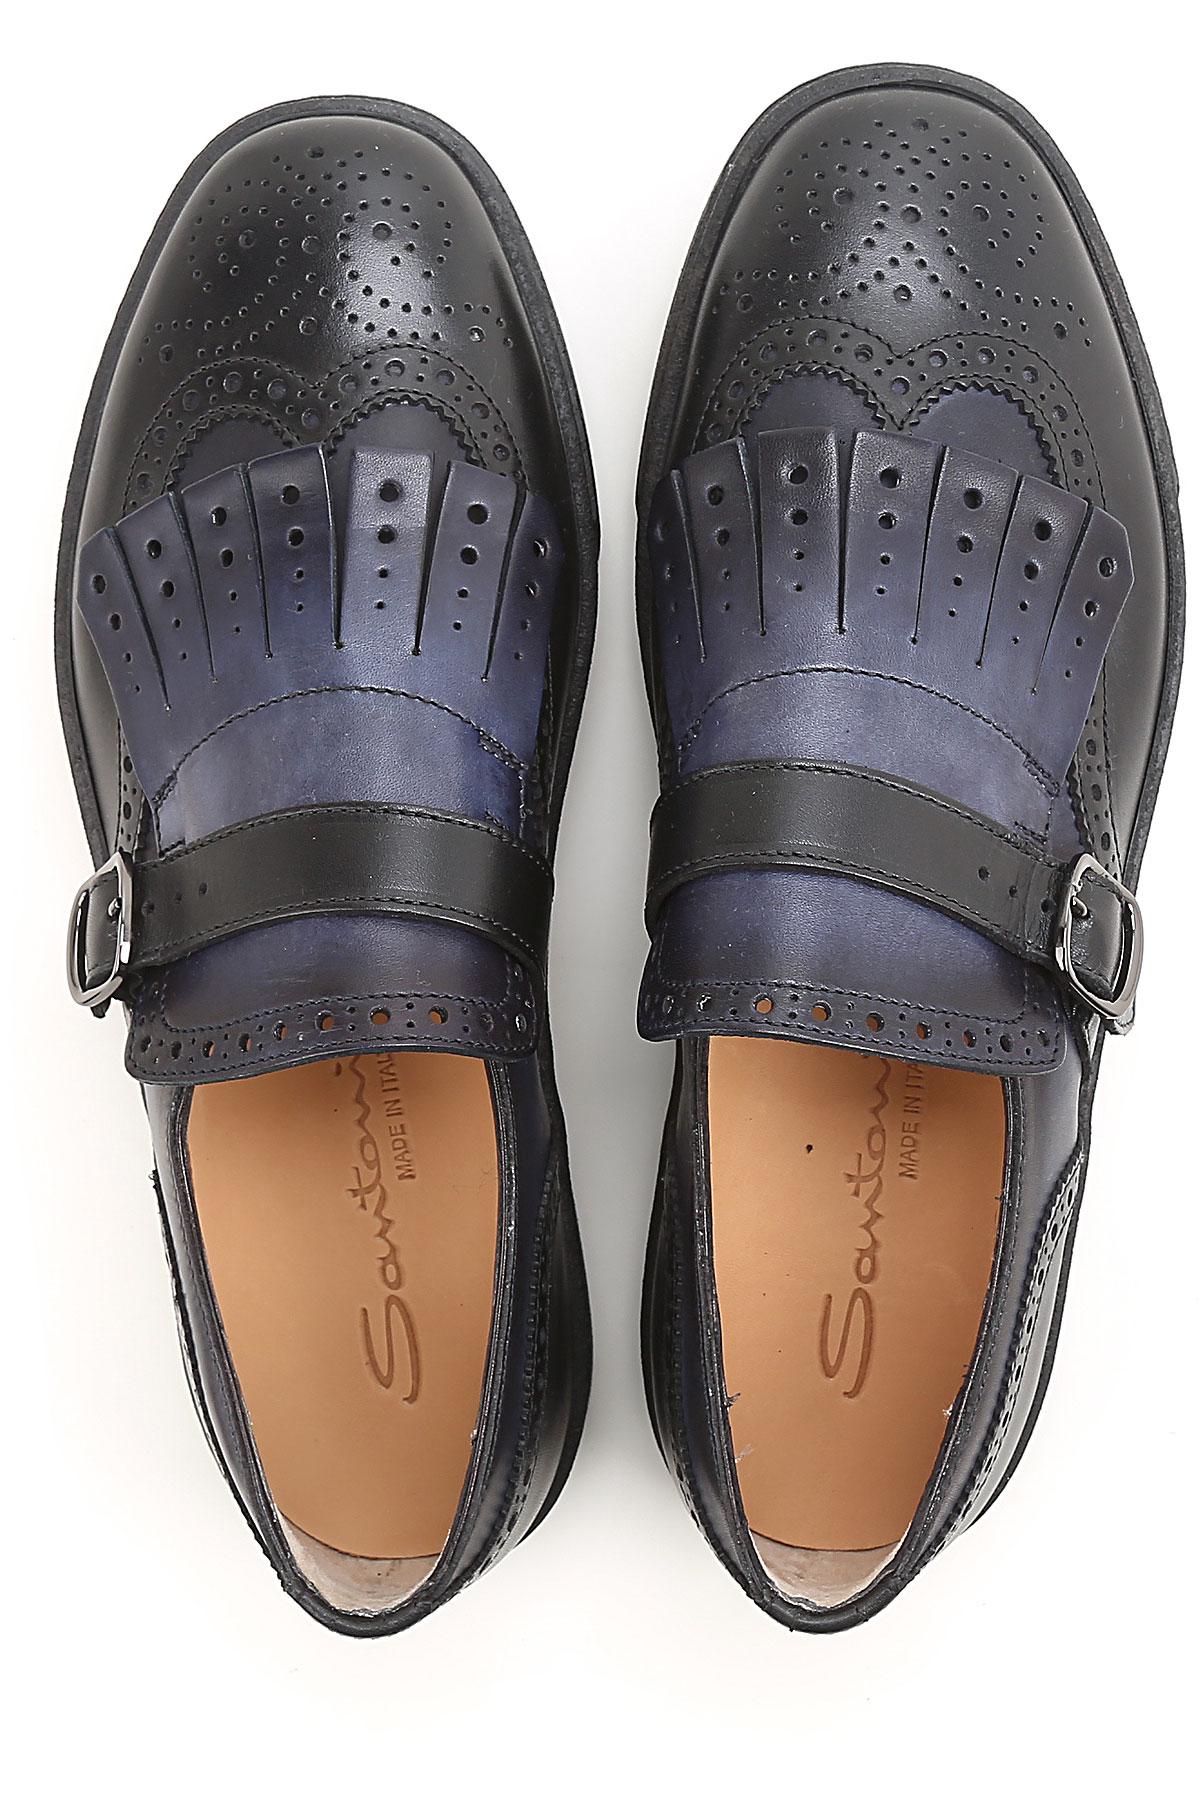 Santoni Leather Driver Loafer Shoes For Men On Sale In Outlet in Blue for Men - Lyst